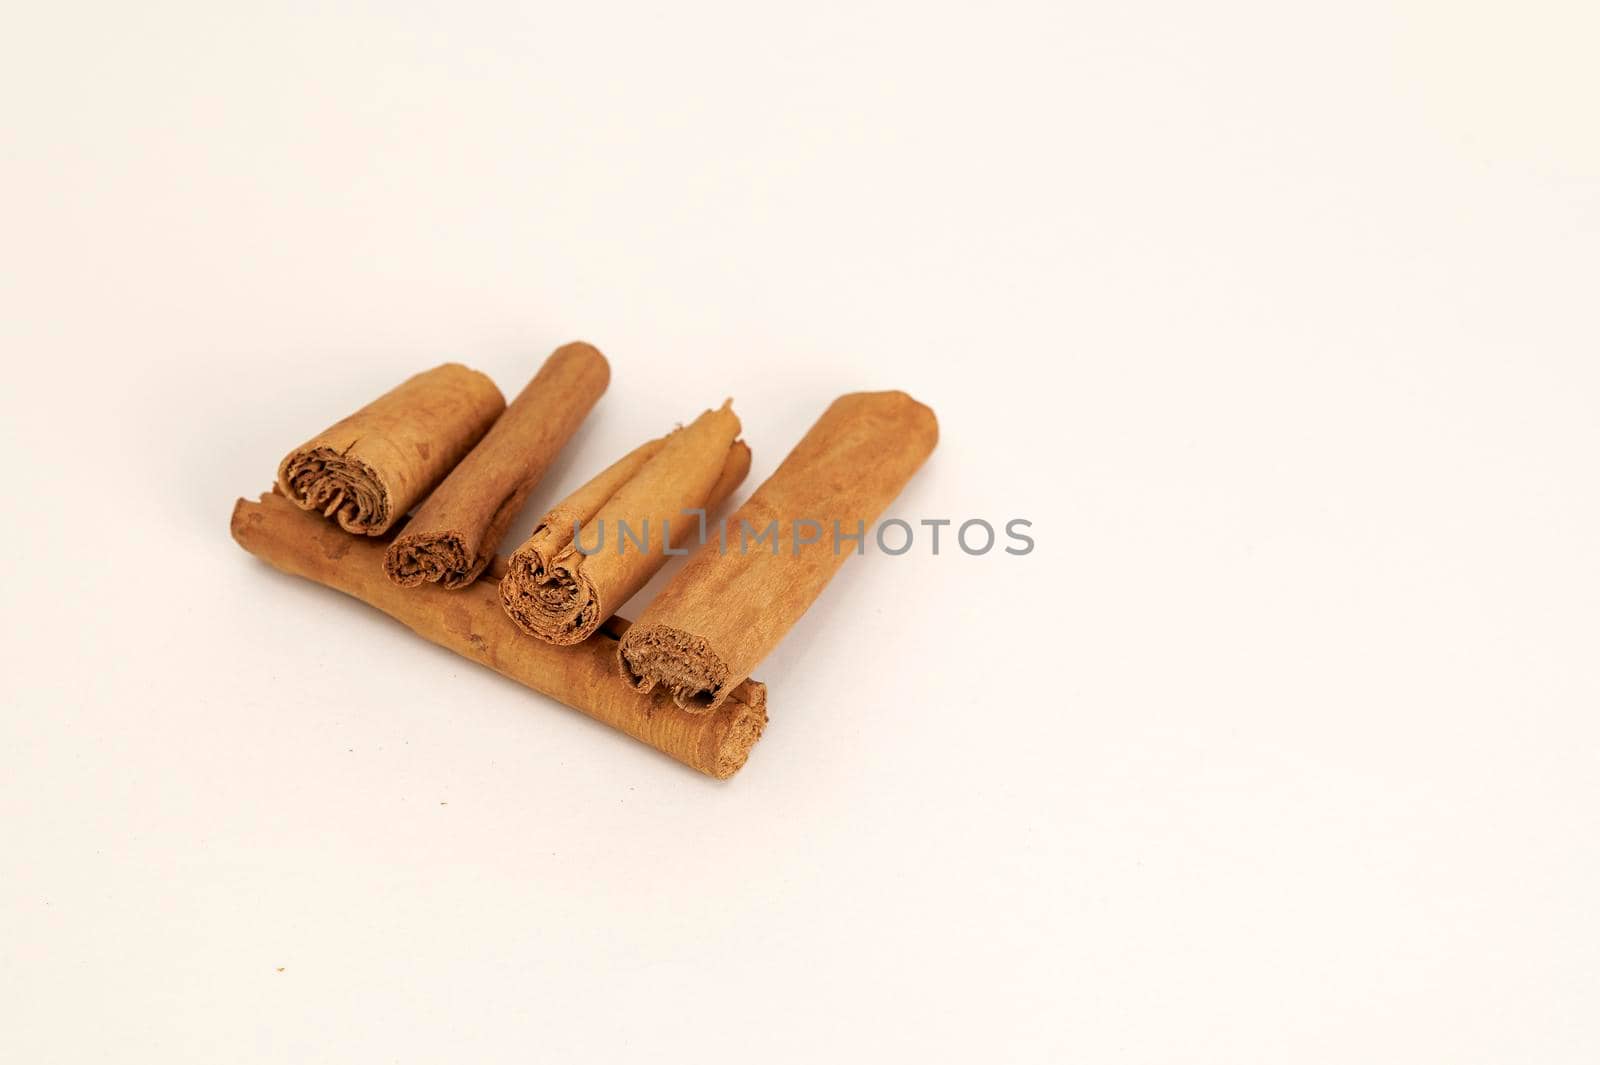 Closeup view of Cinnamon sticks on a white background